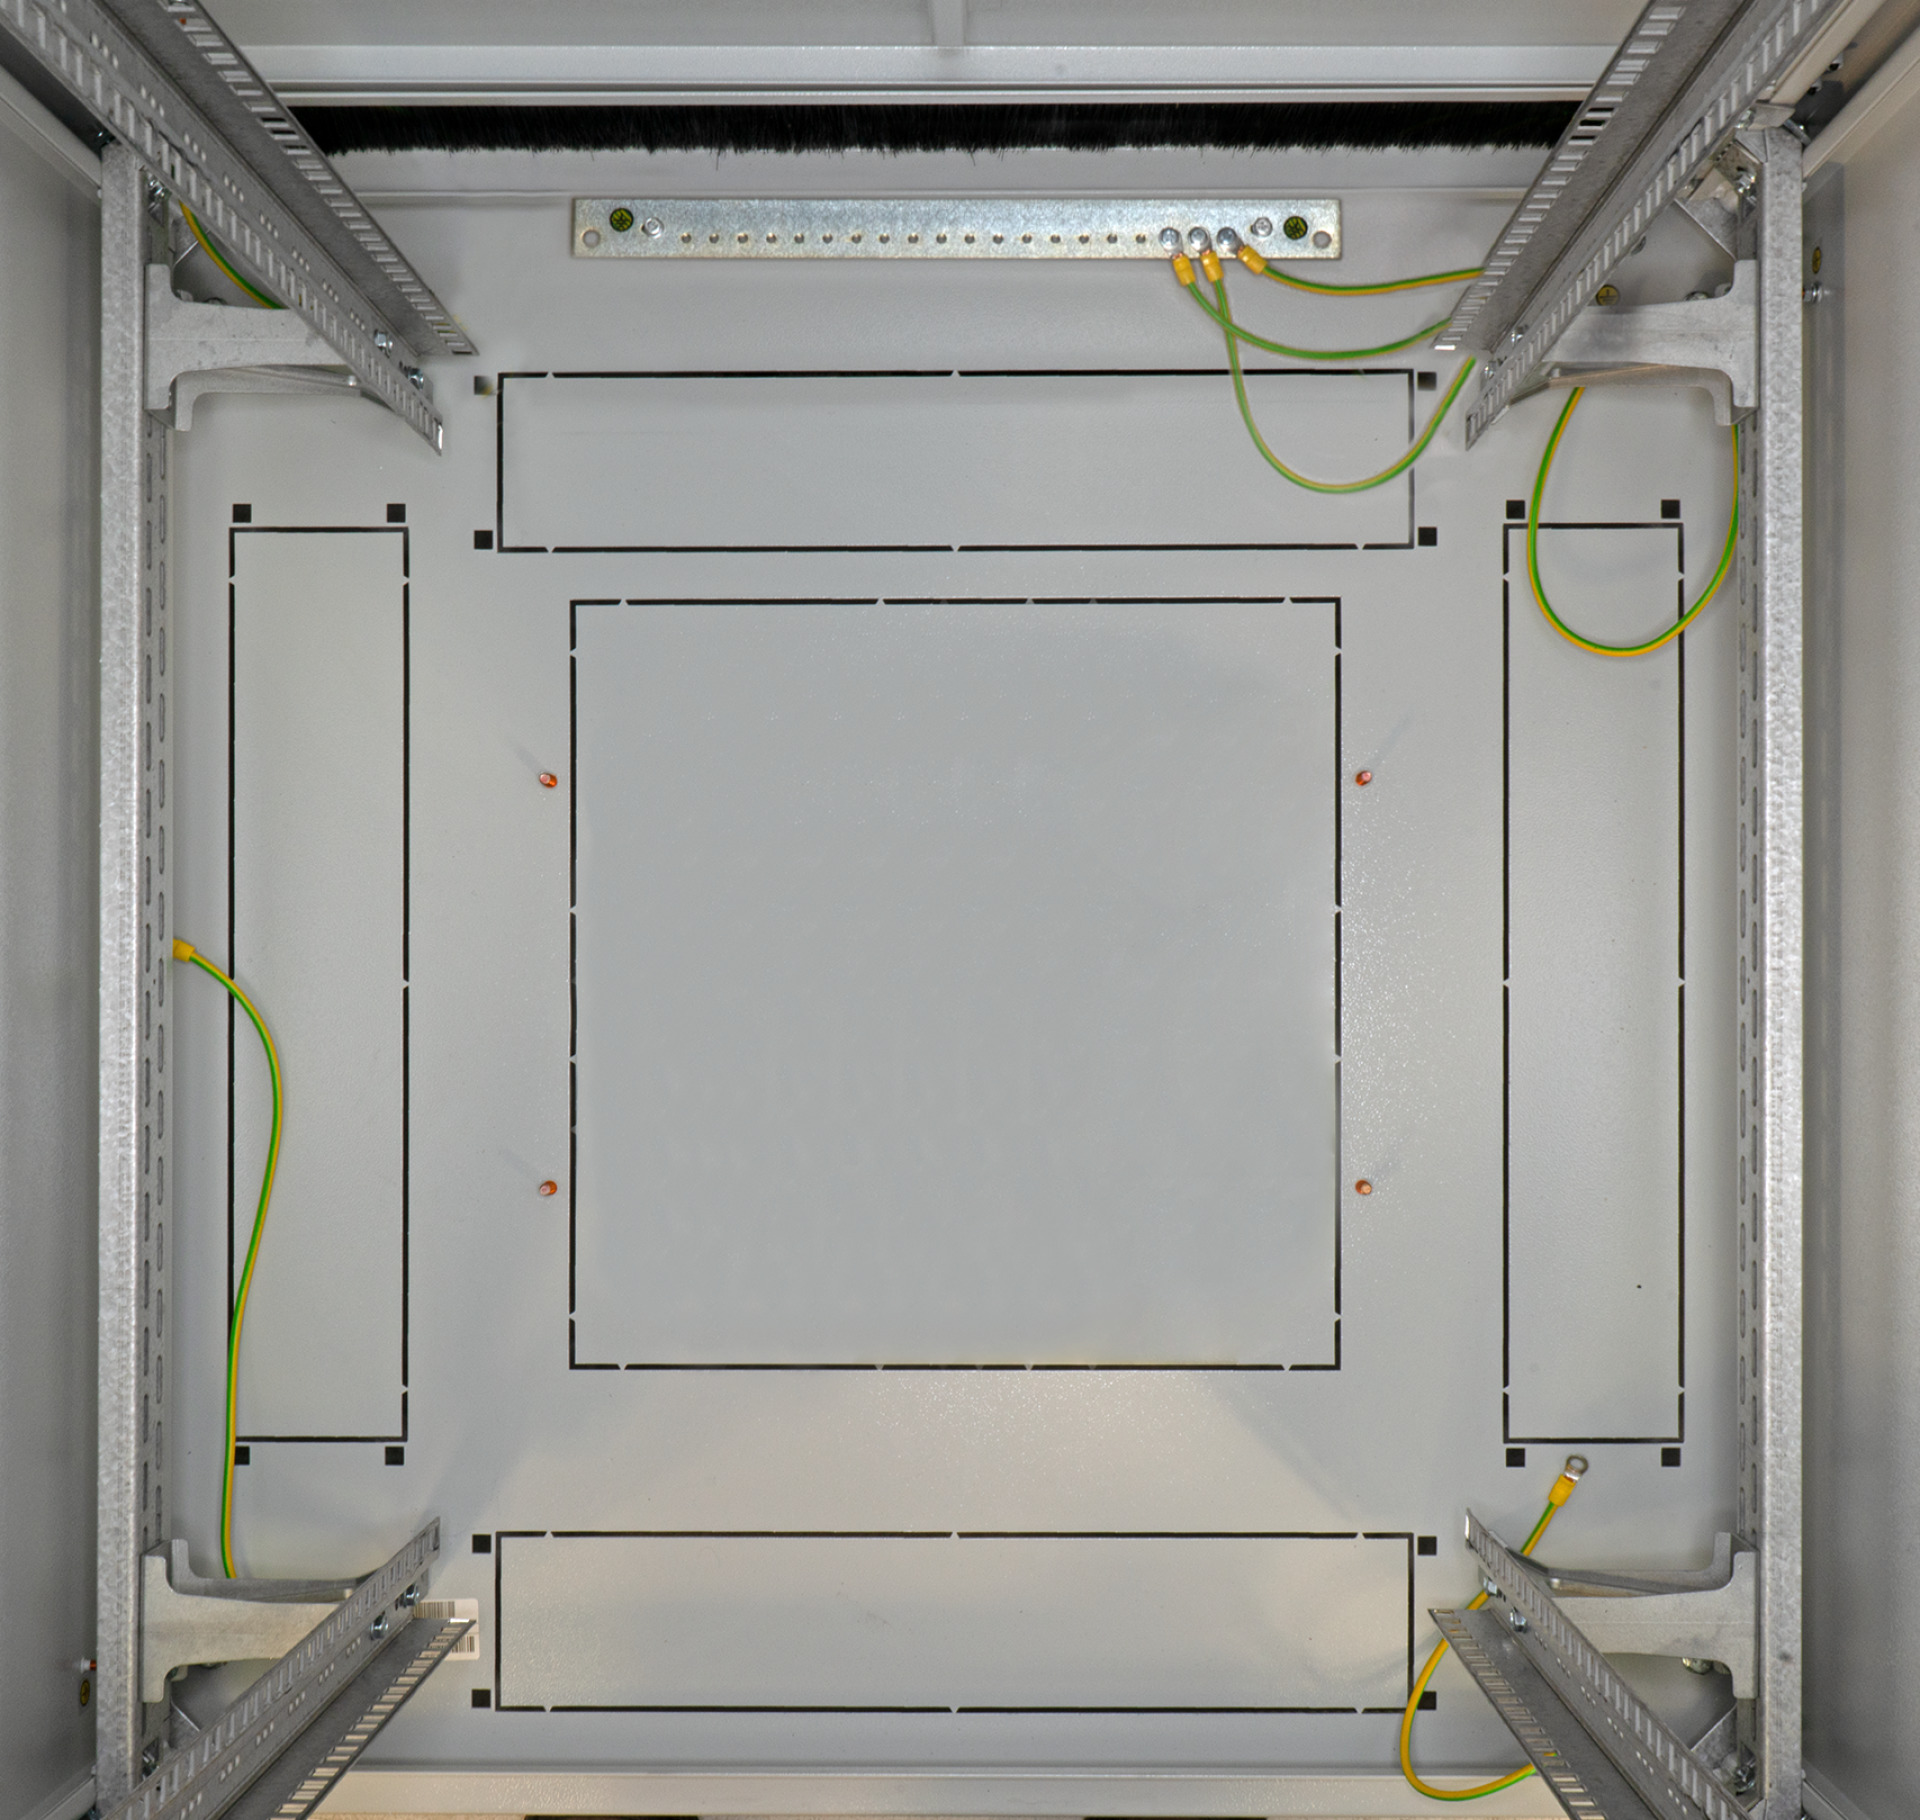 Network Cabinet PRO 18U, 600x600 mm, RAL7035